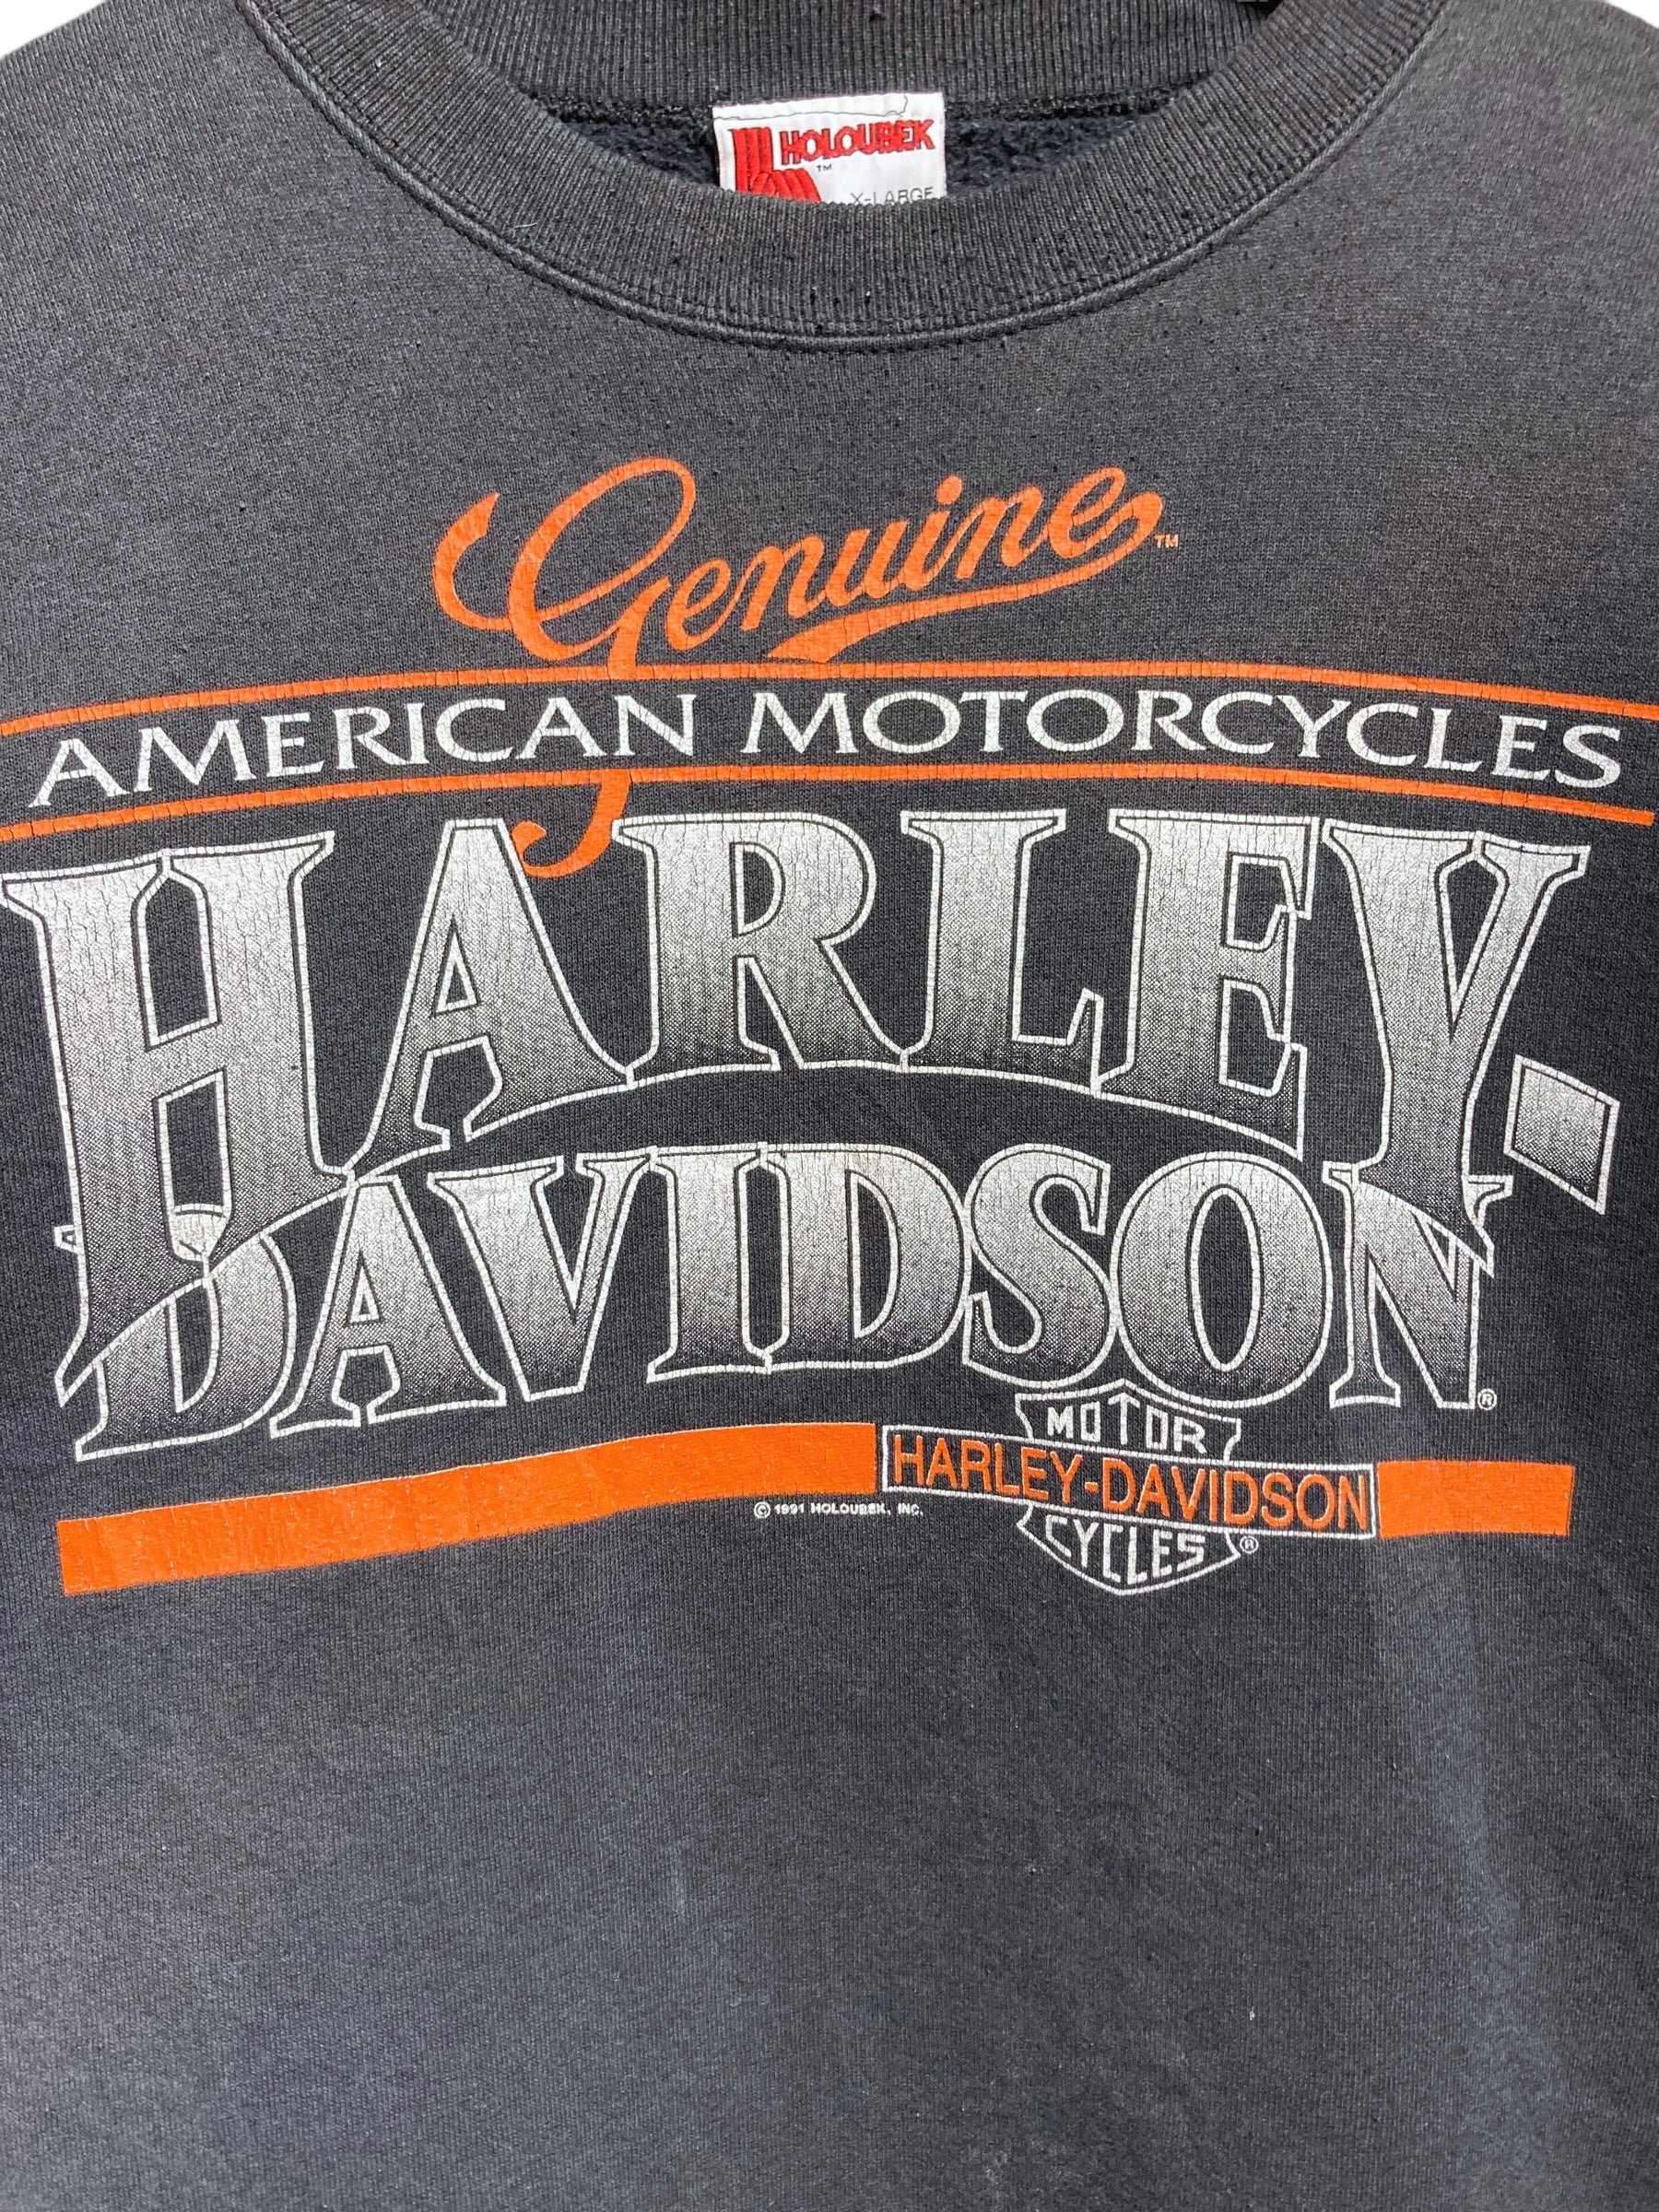 Harley Davidson ハーレーダビッドソン HOLOUBEK 90s スウェット トレーナー